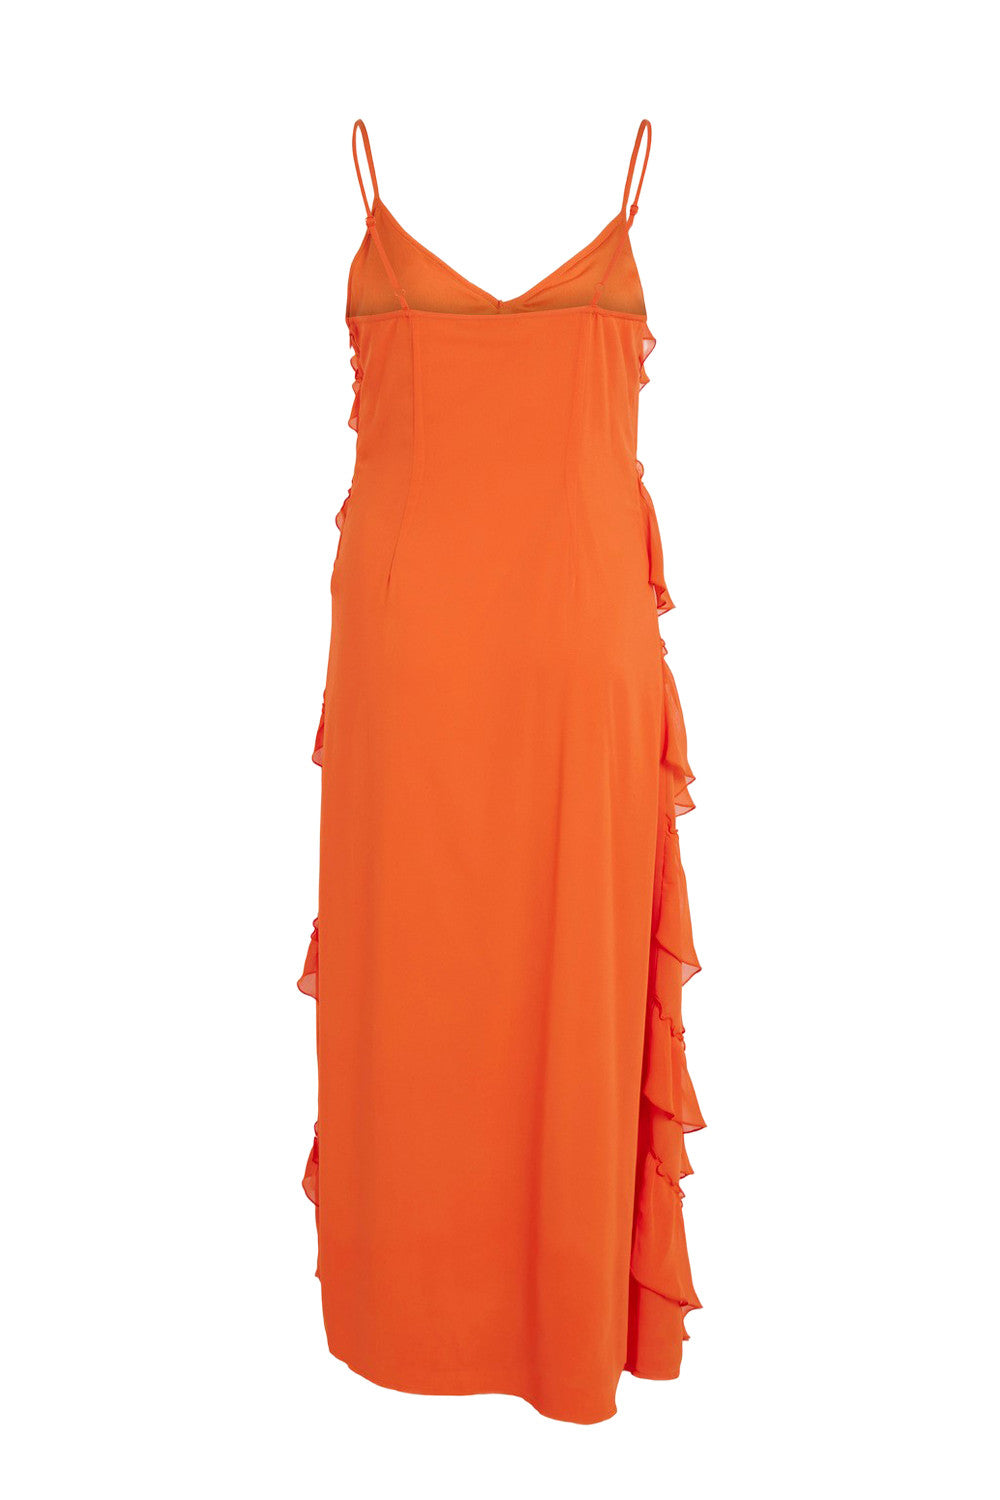 Plain Orange V-Neck Dress